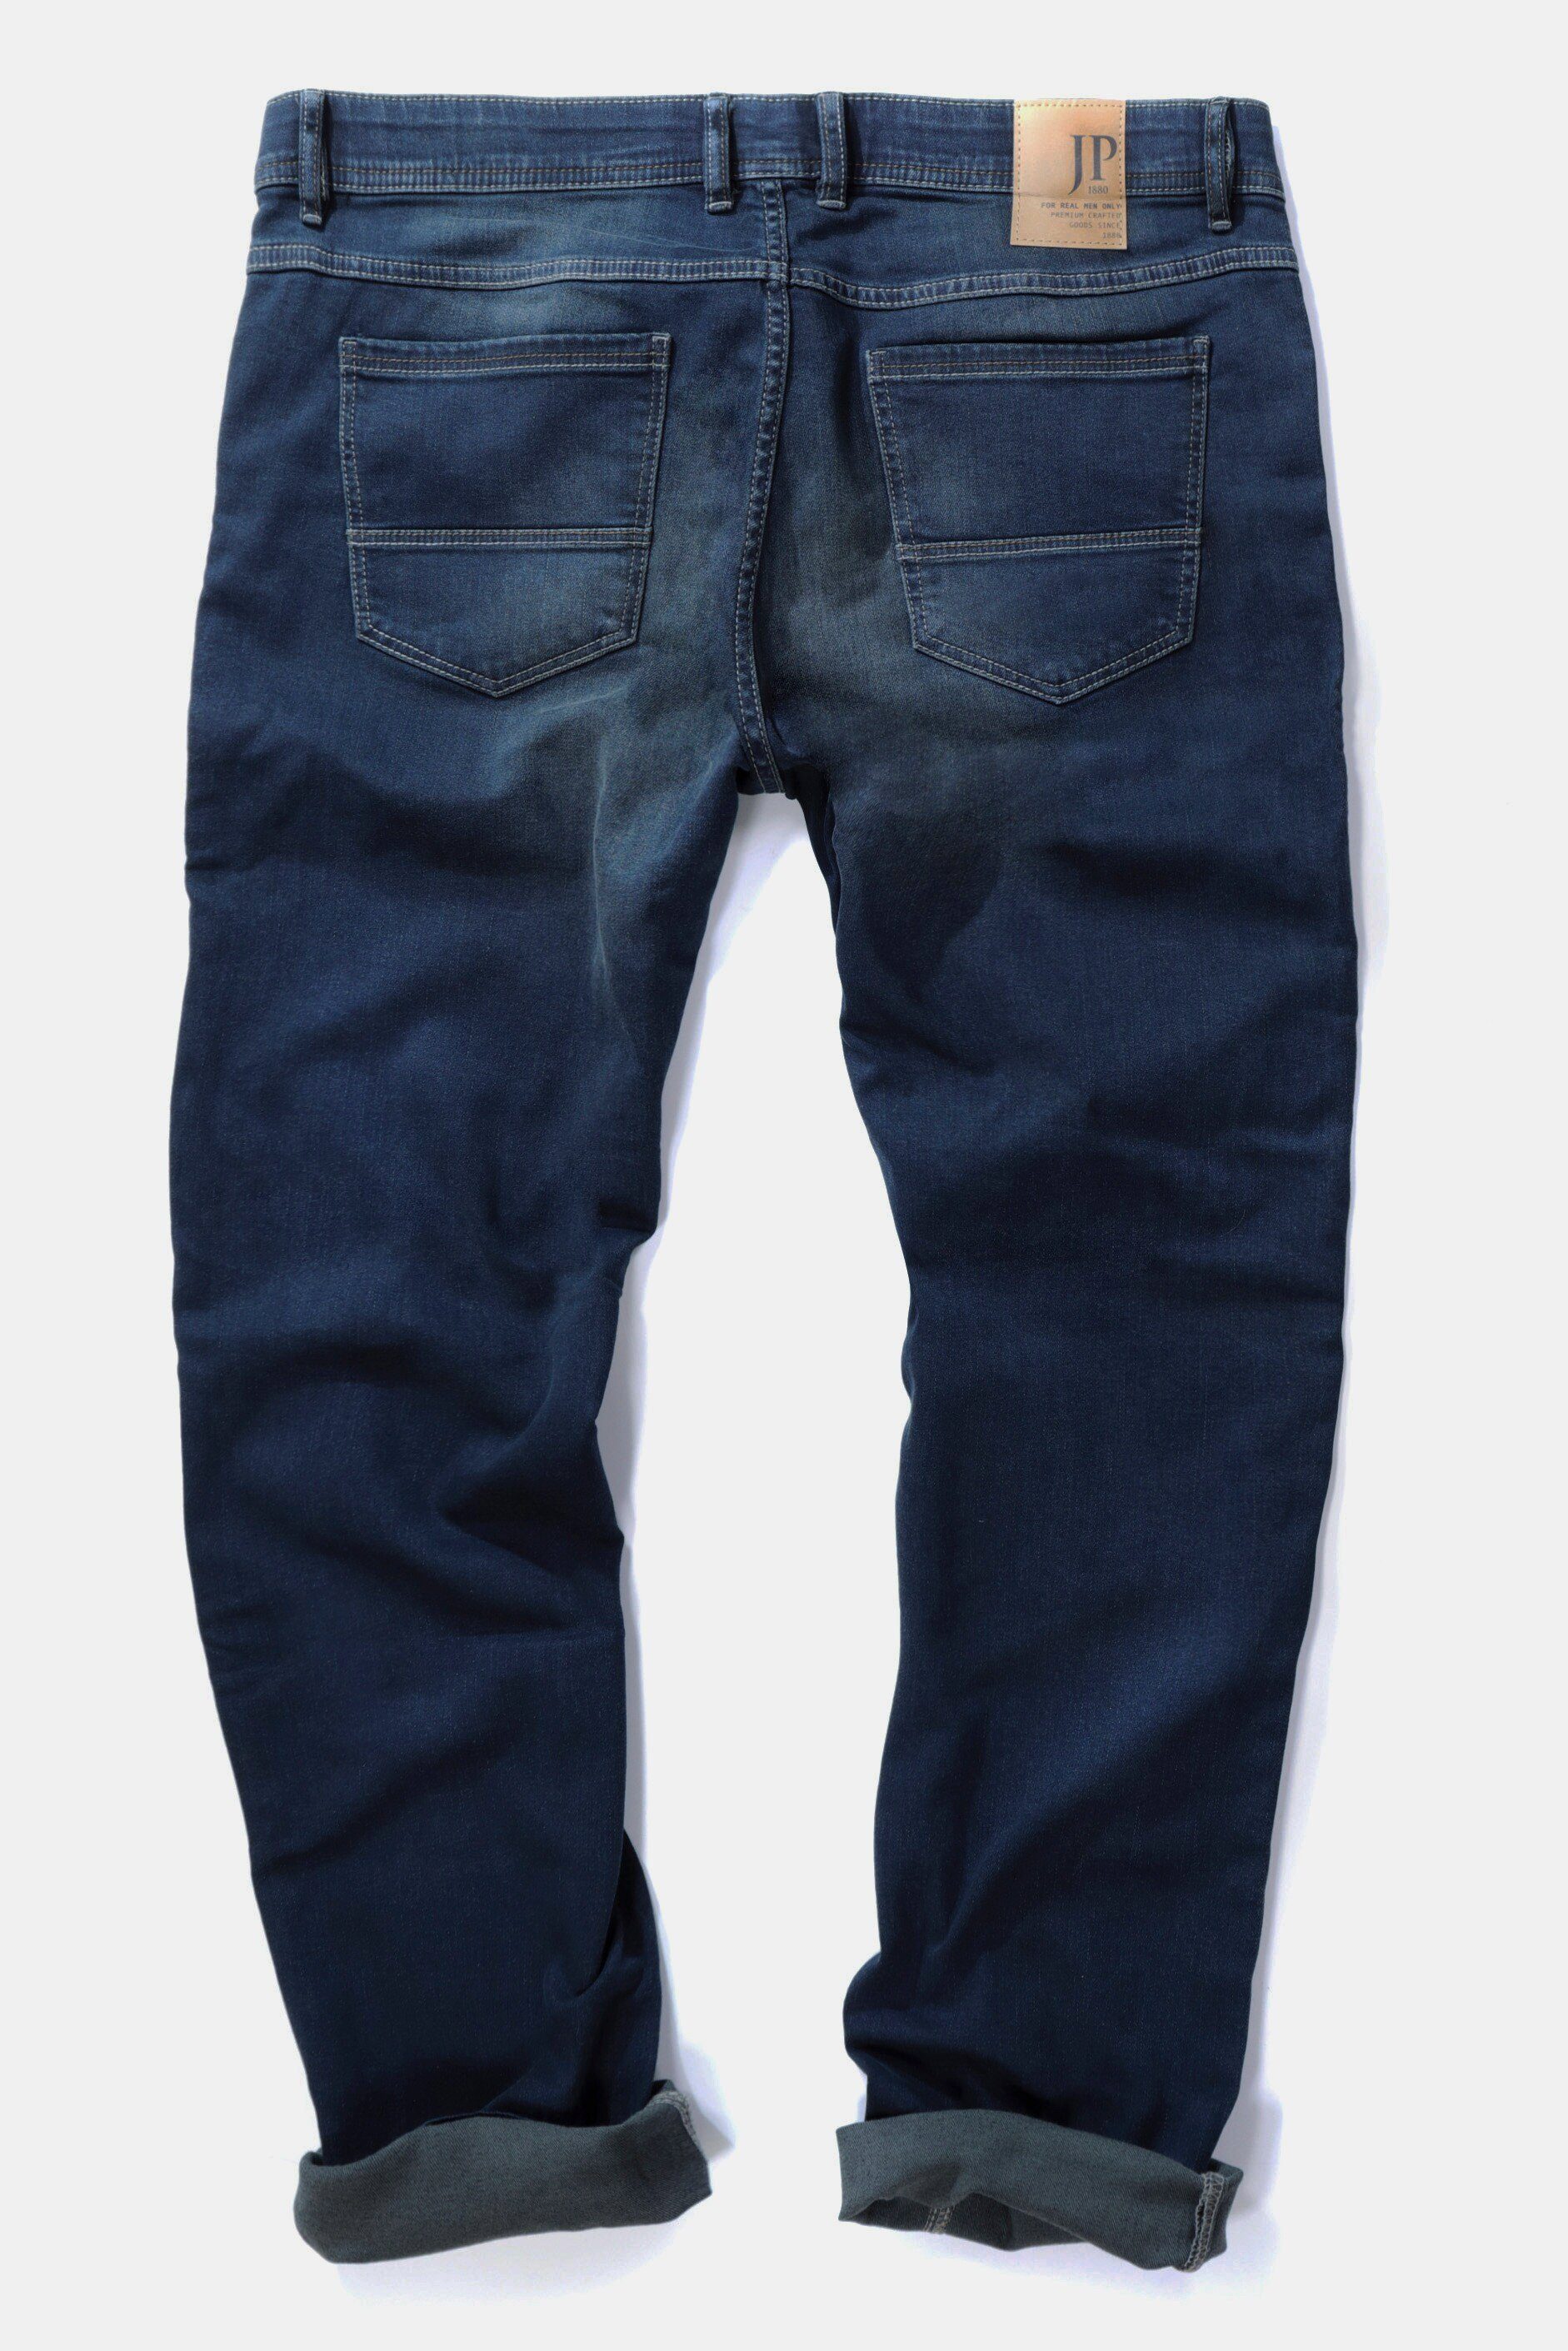 Gr. Cargohose JP1880 70/35 Jeans Bauchfit bis blue Denim denim